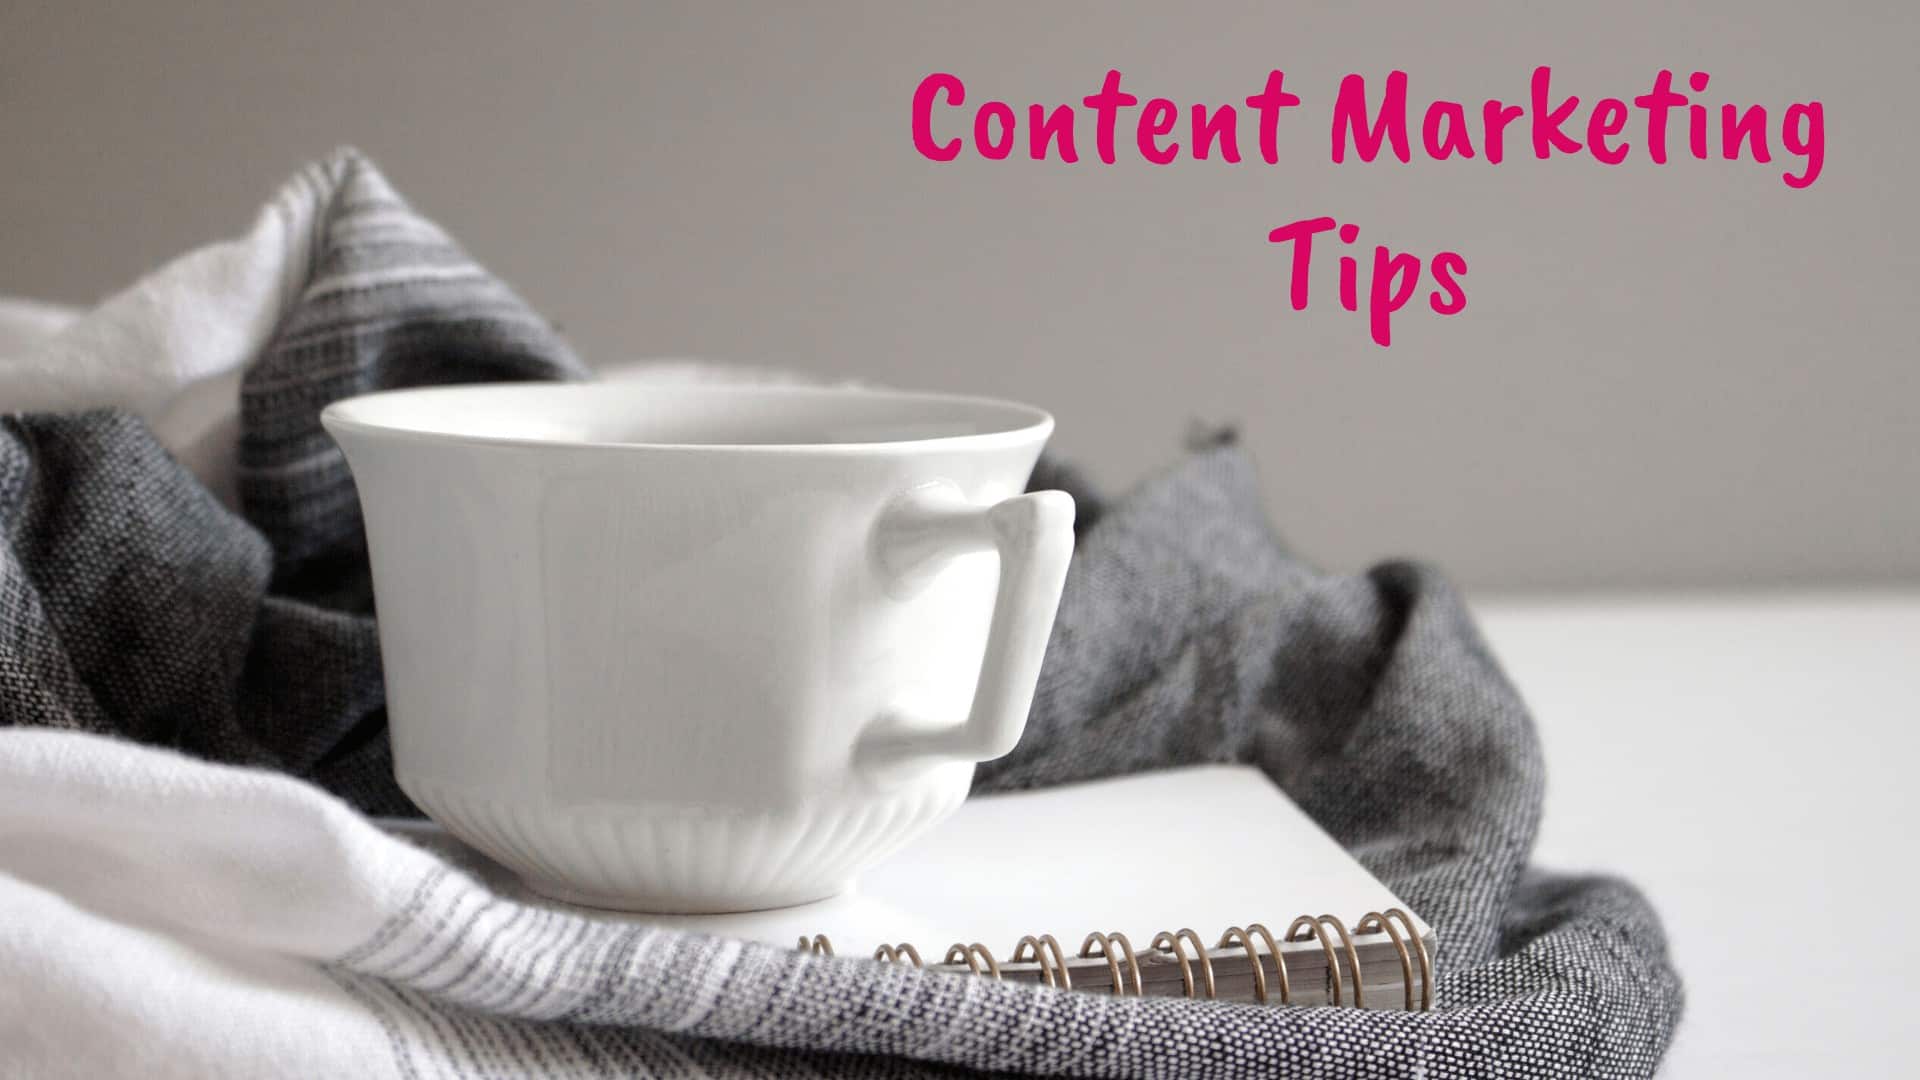 Content Marketing Tips - Blog